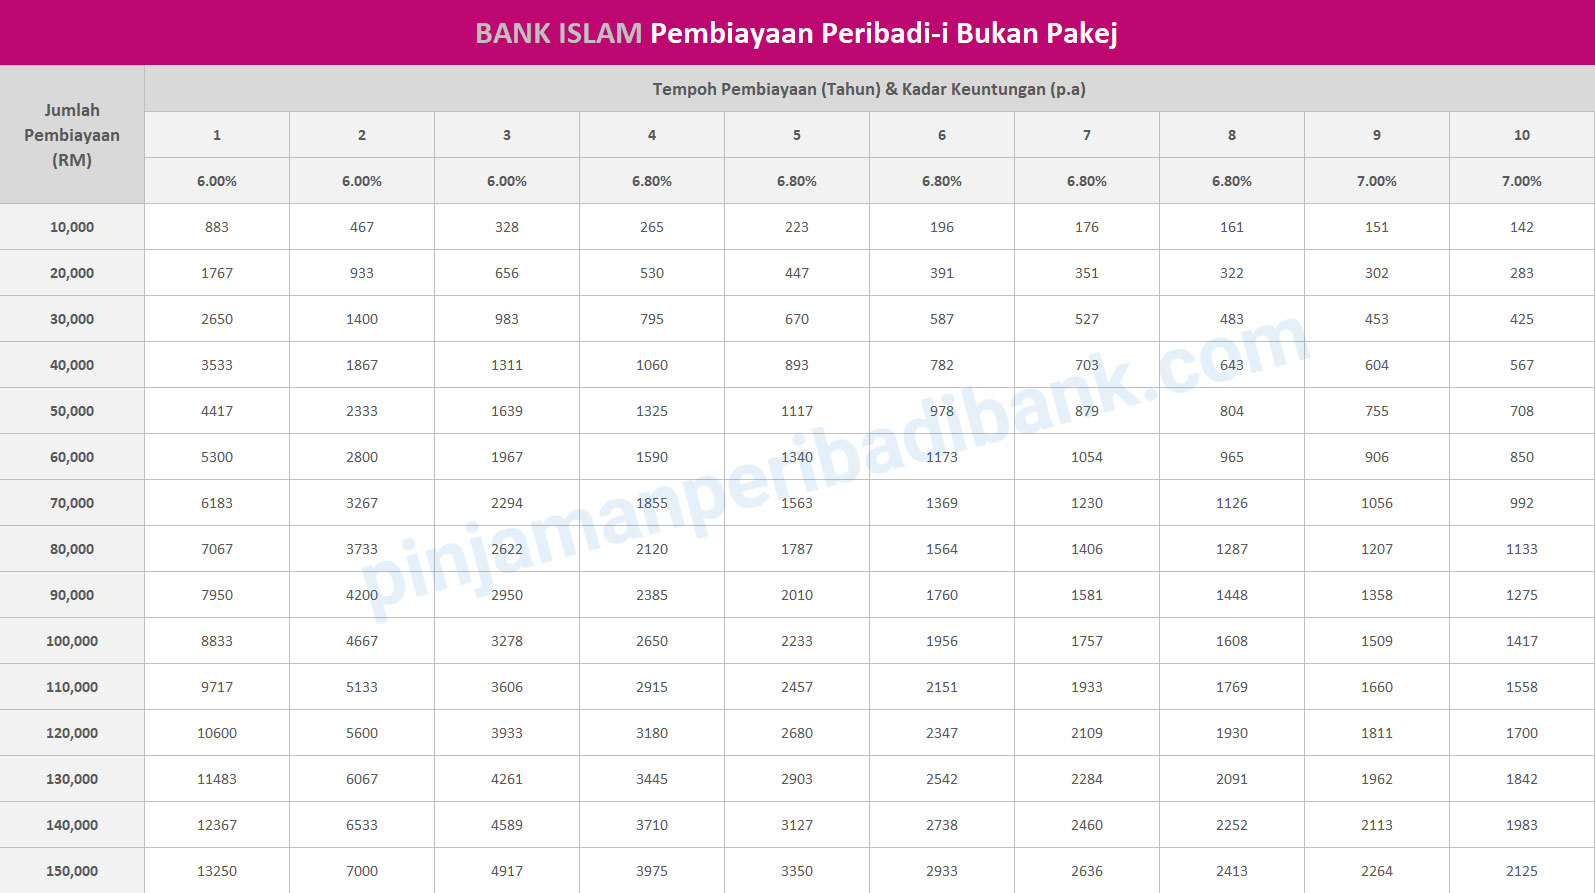 Bank Islam Personal Loan Table 2020